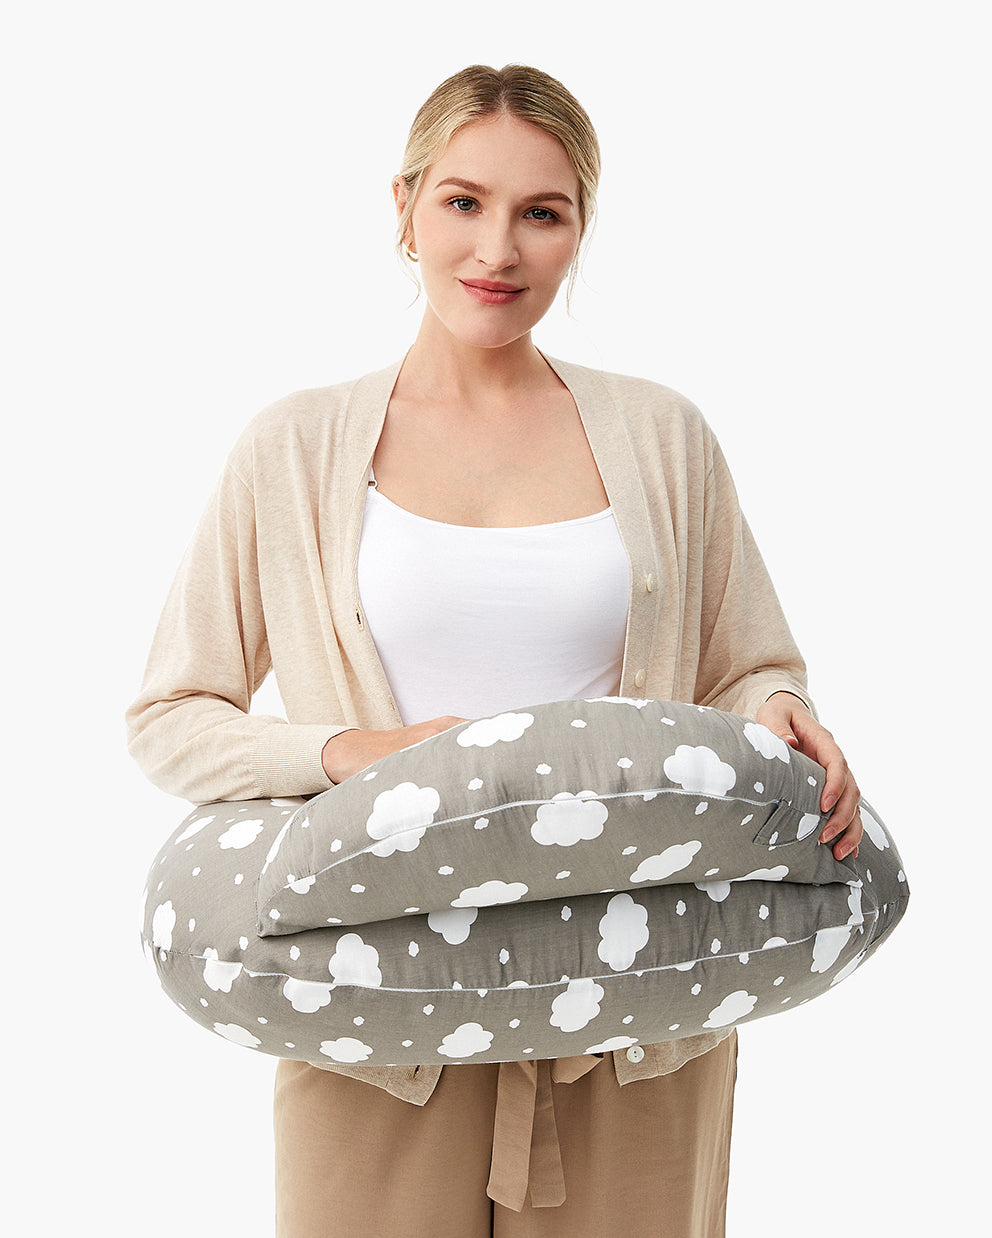 Momcozy Nursing Pillow for Breastfeeding, Original Plus Size Breastfeeding  Pillows